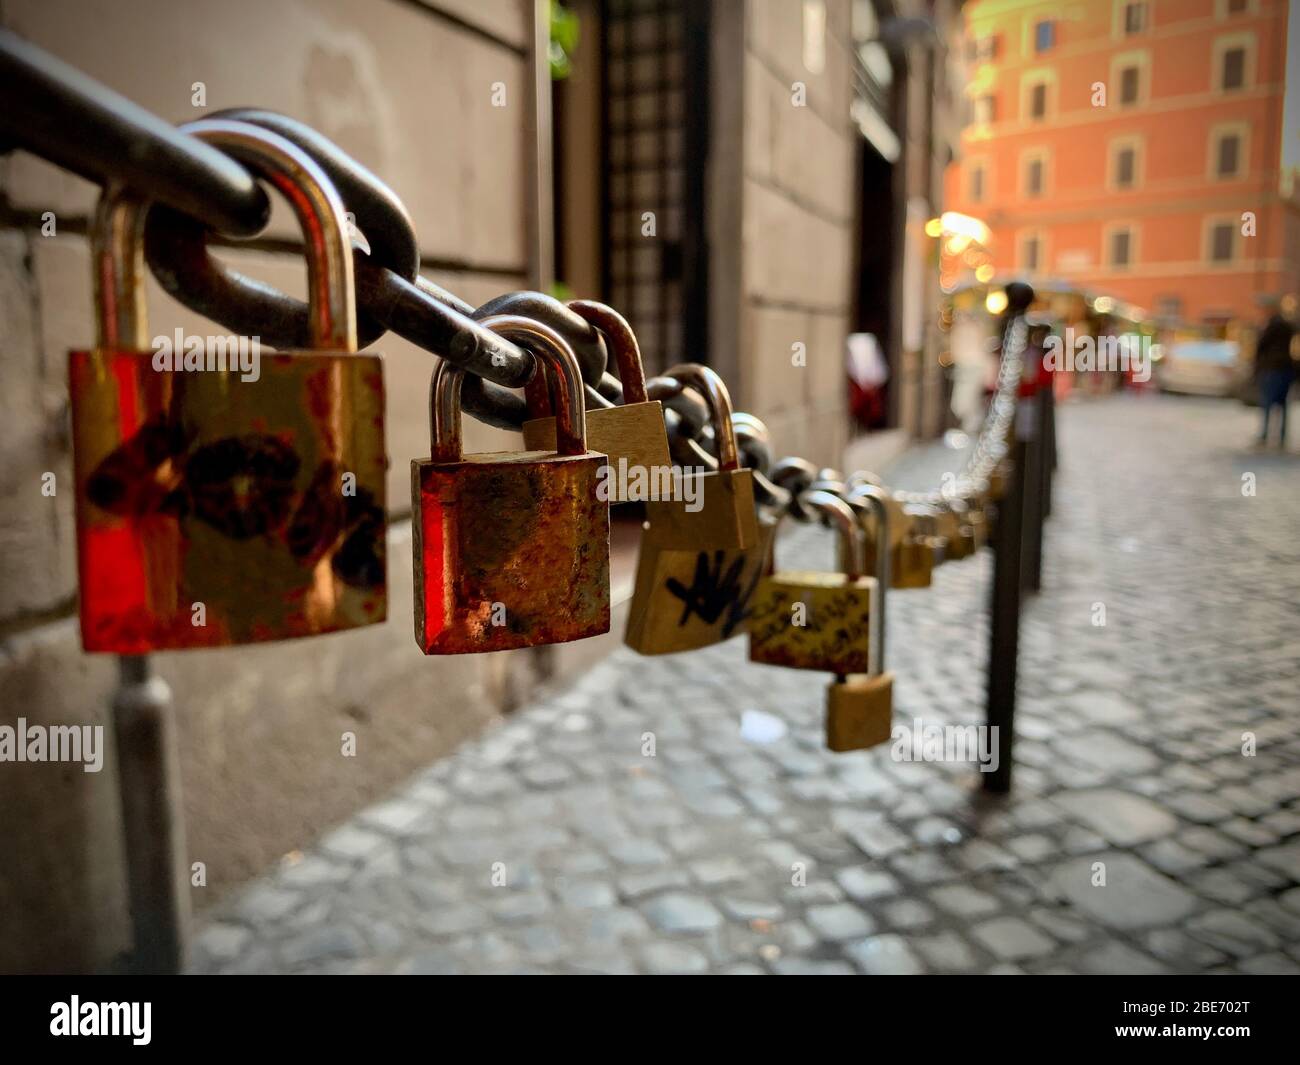 J'adore les cadenas enchaînés dans une rue de Rome Banque D'Images